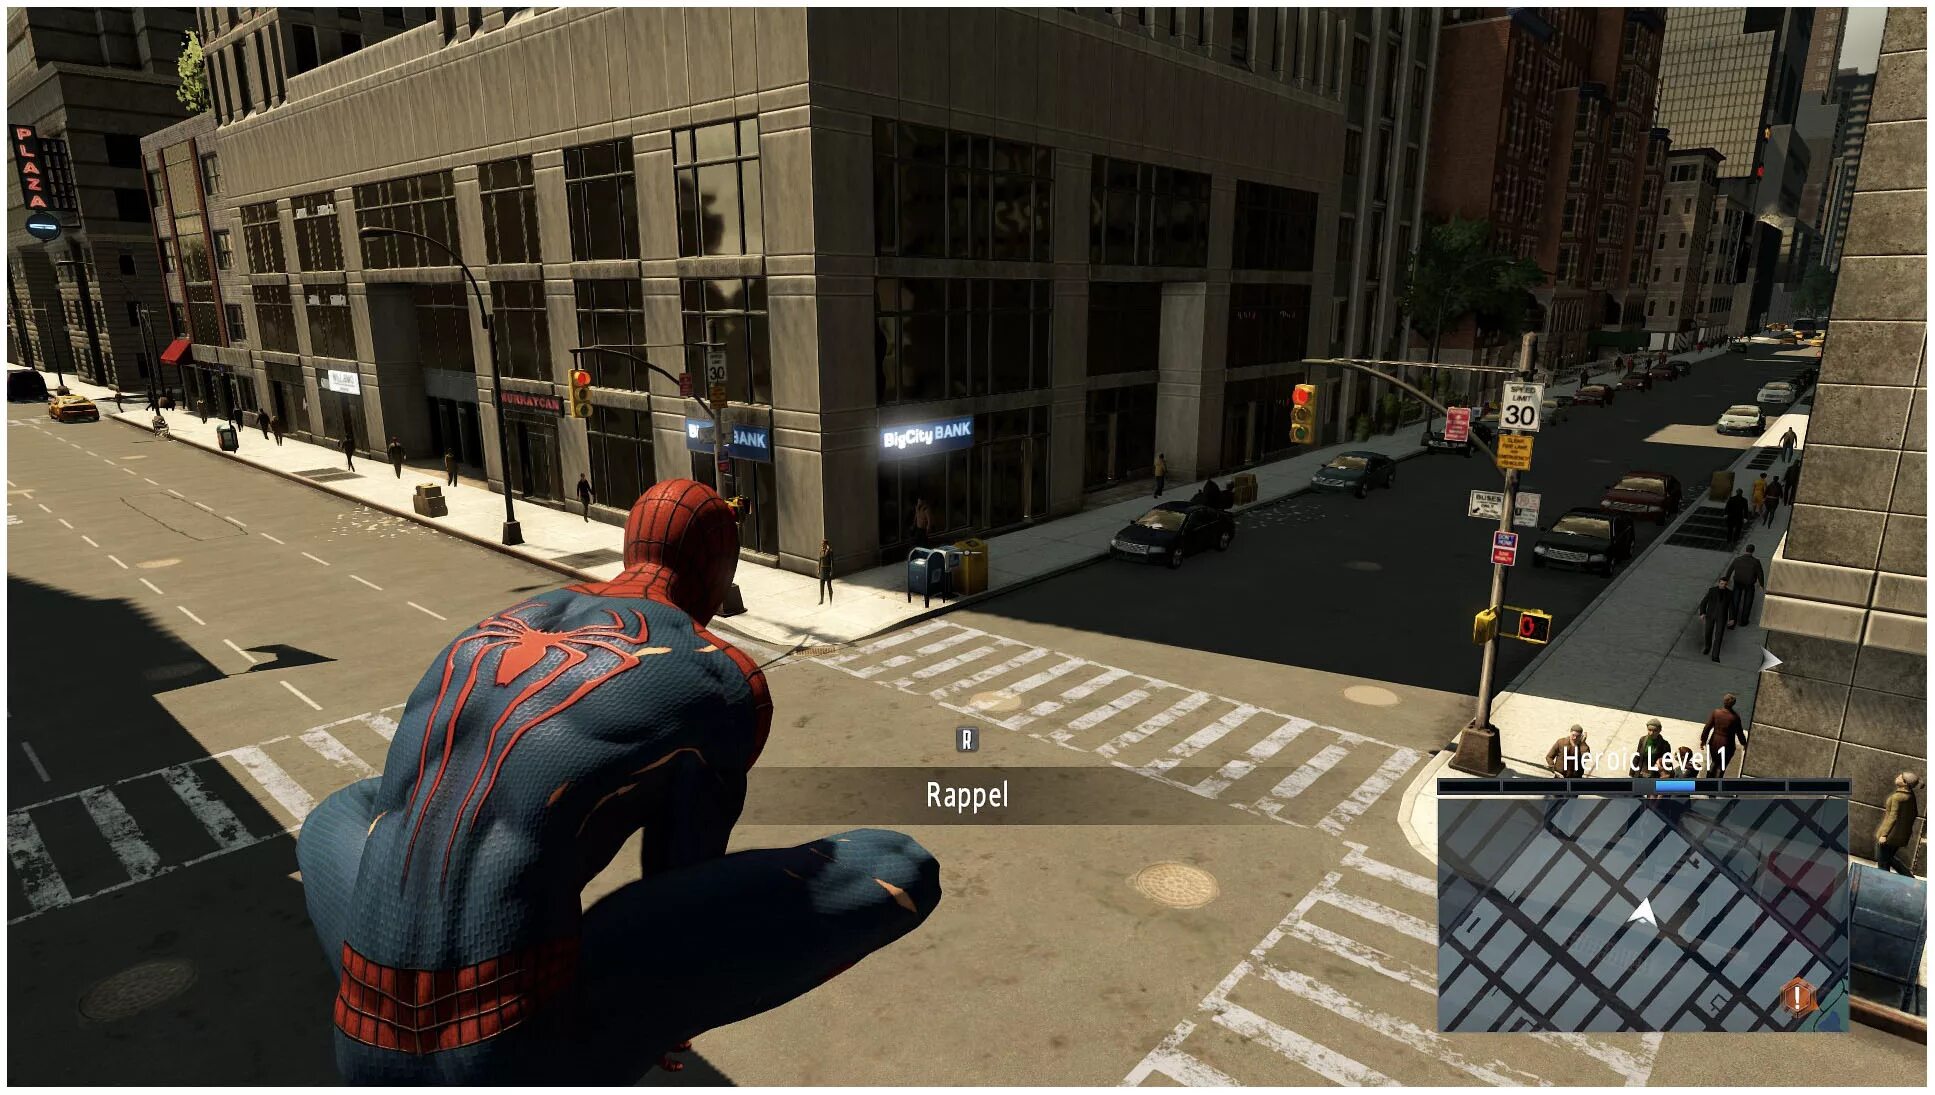 Игра человек камера. Эмэйзинг Спайдер Мэн 2. The amazing Spider-man 2 (игра, 2014). Человек паук амазинг 2 игра. Эмэйзинг Спайдер Мэн игра.